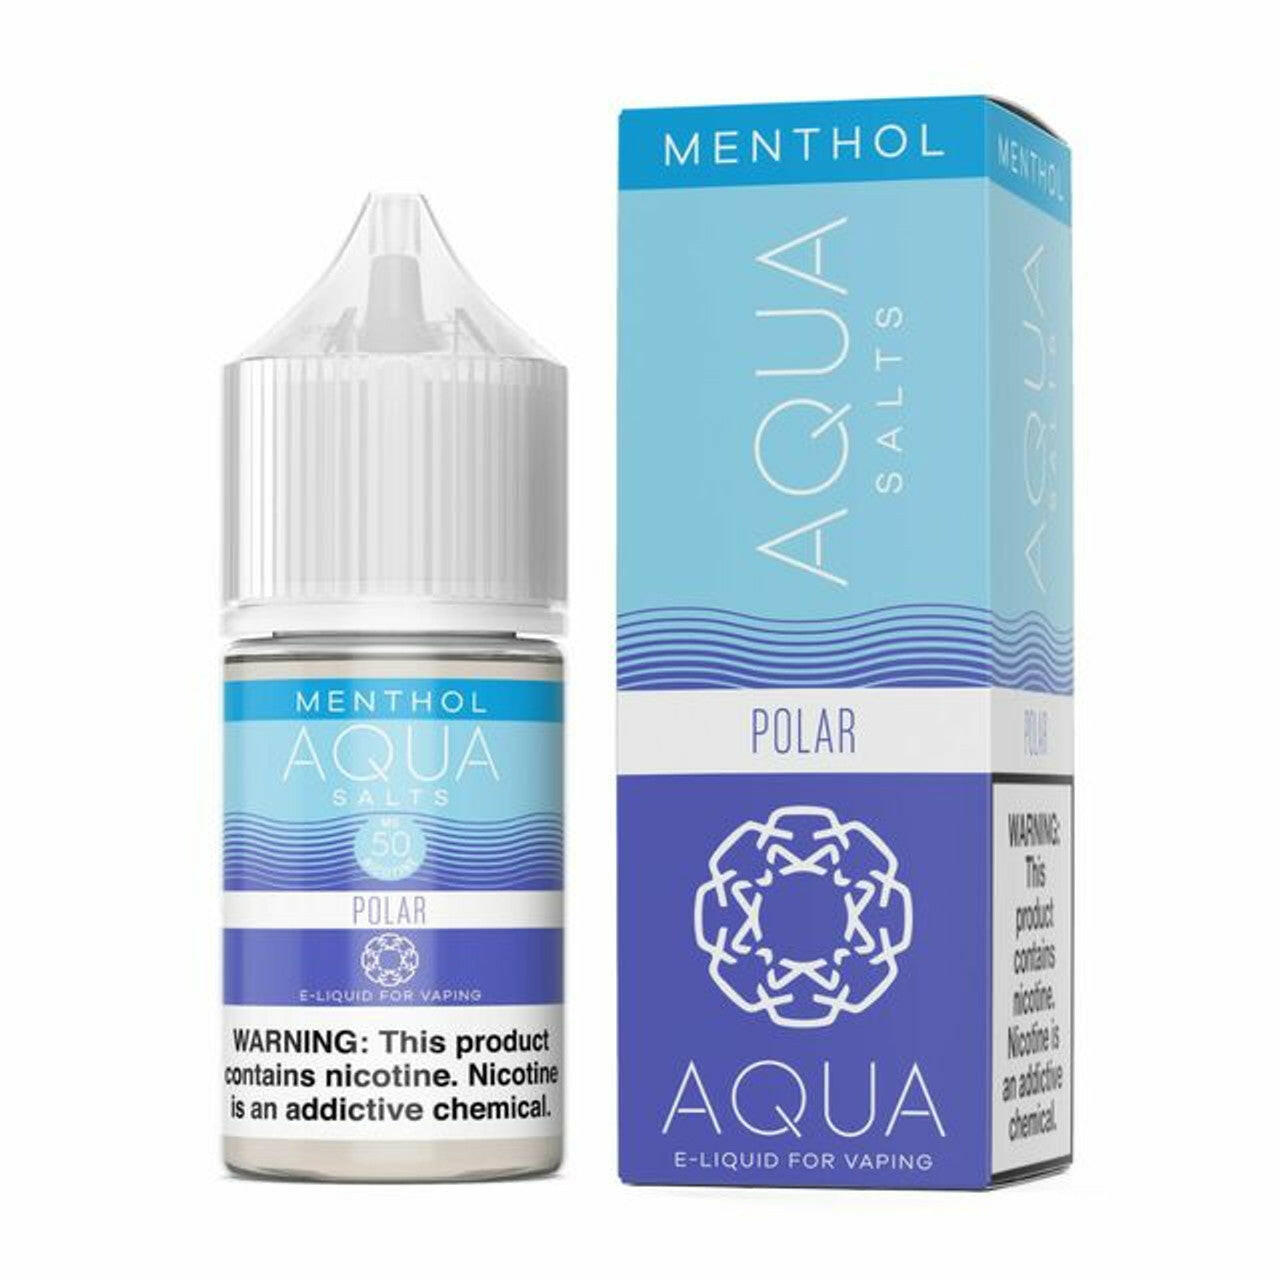 Aqua Salts Menthol Collection Synthetic Nicotine Salt E-Liquid By Marina Vape 30ML Polar 